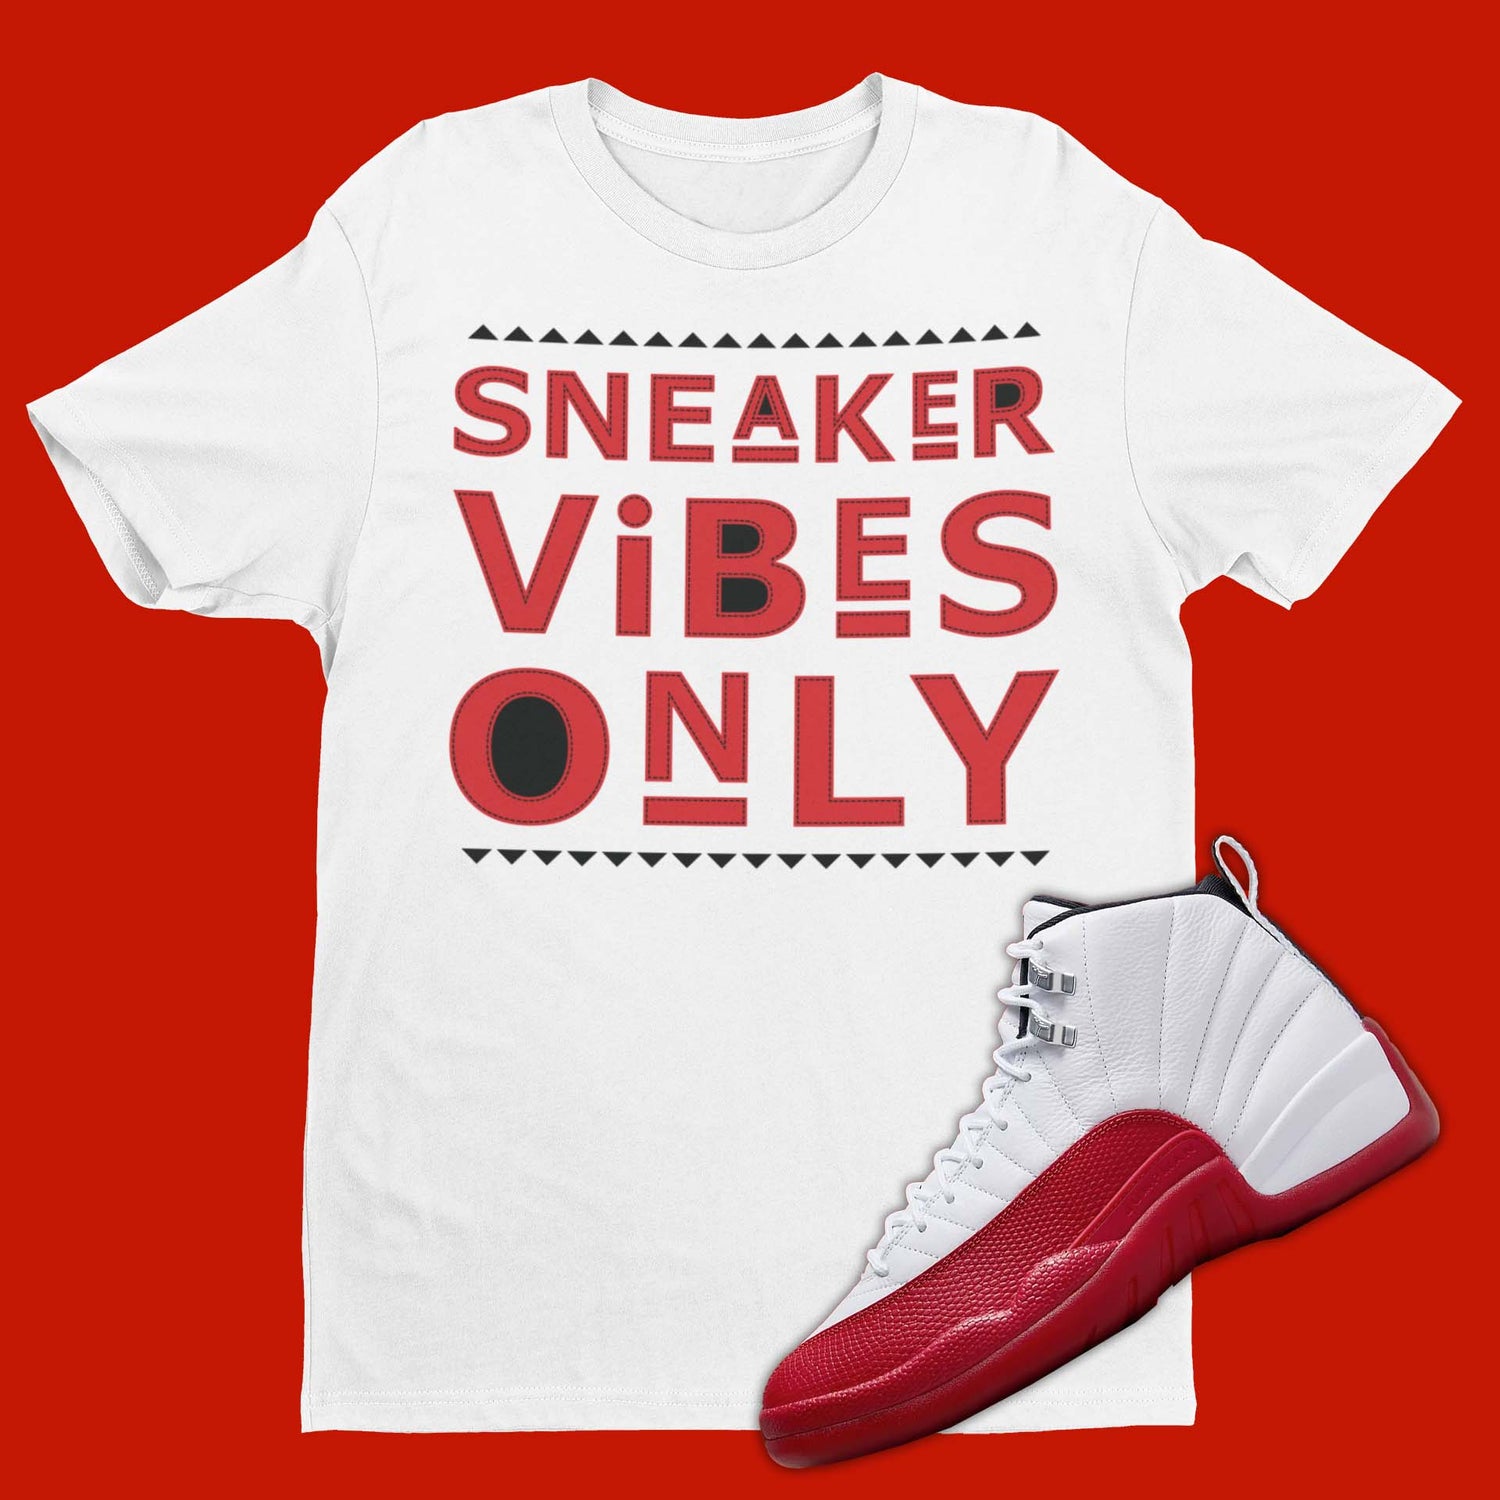 Sneaker Vibes Only Air Jordan 12 Cherry Matching T-Shirt from SNKADX